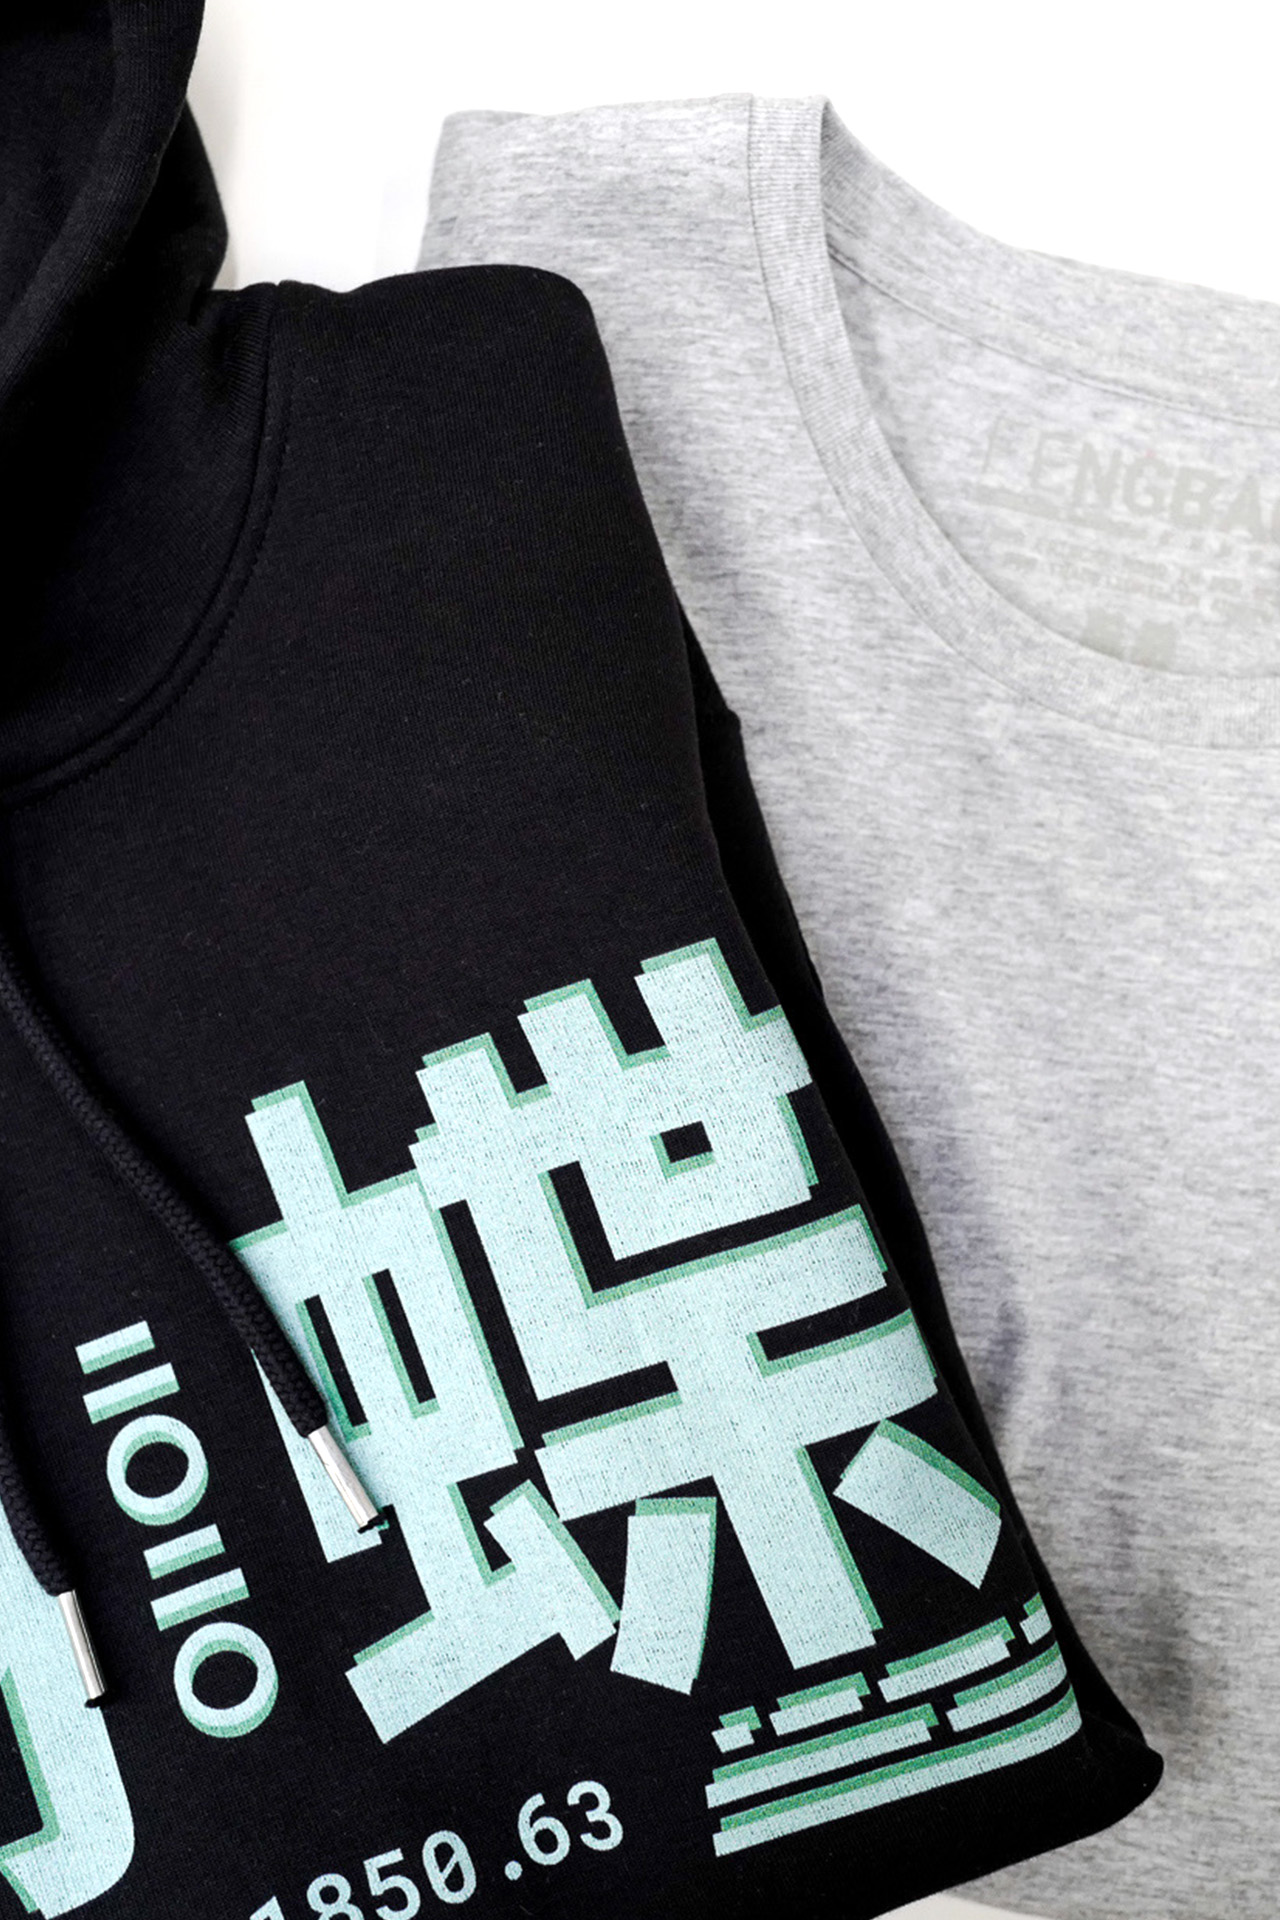 fengbao kung fu shop paket hoodie shirt wien kampfkunst 1080 hoch